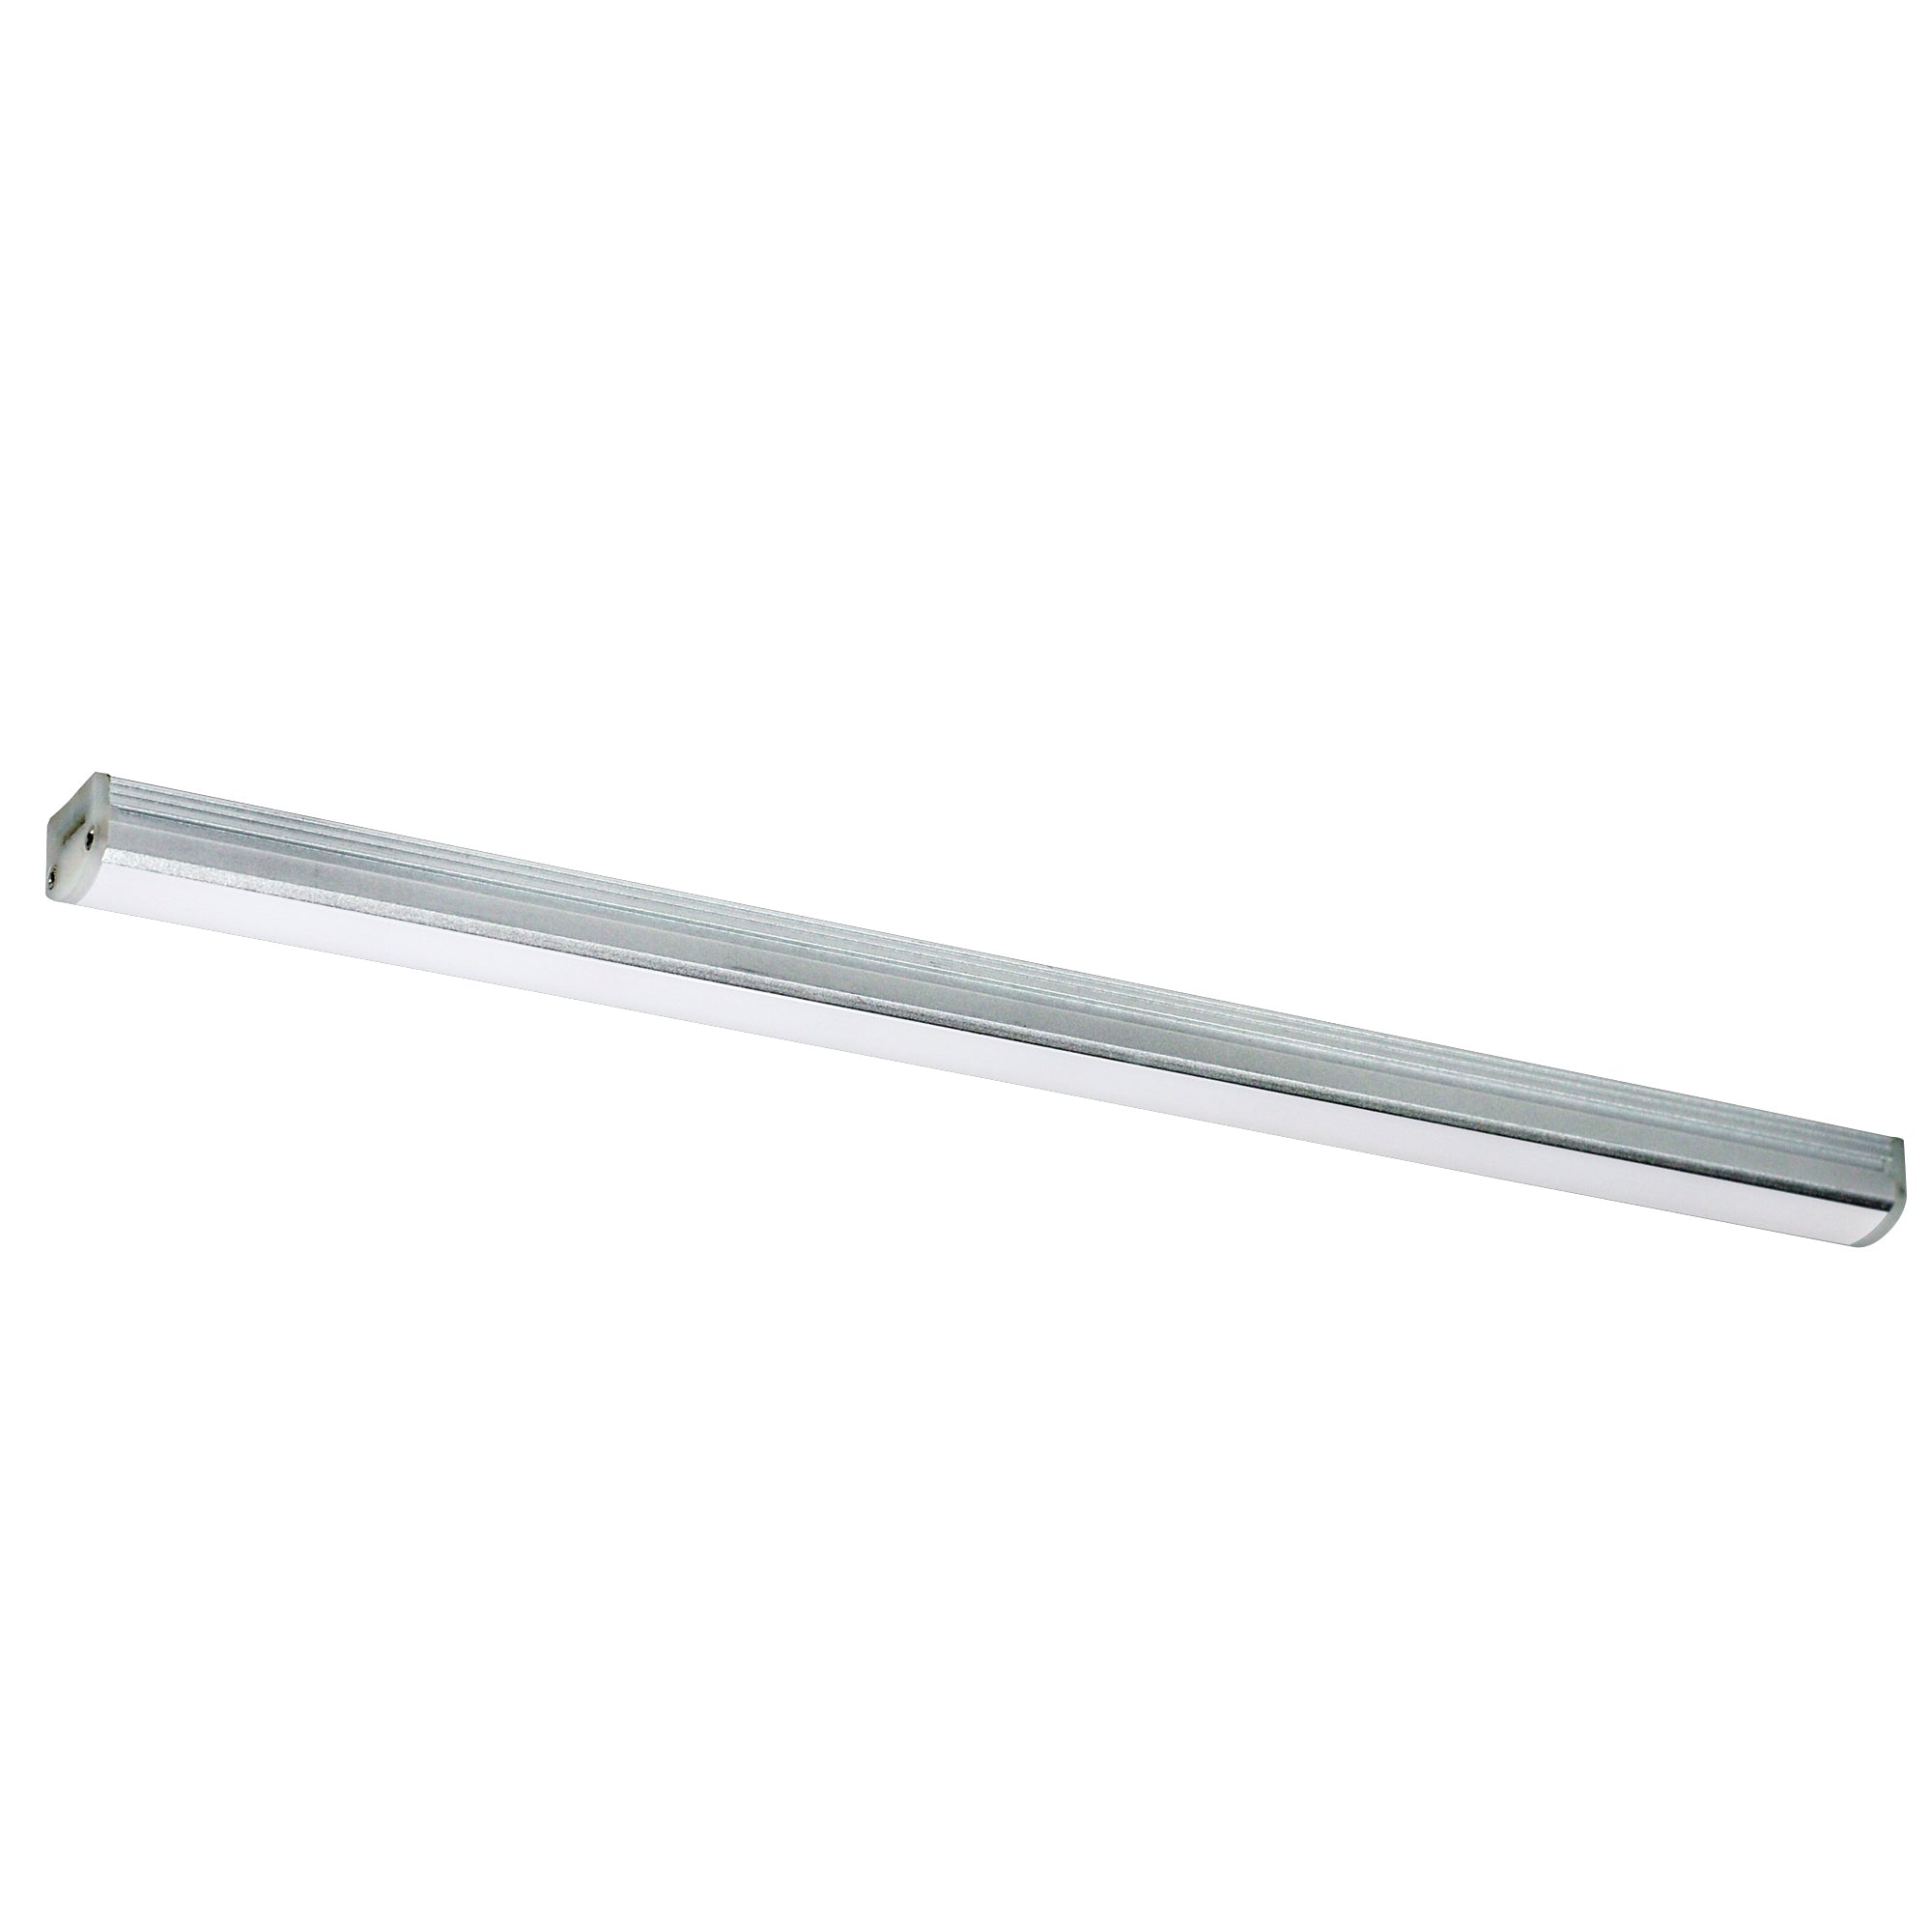 Nora Lighting NULB-824LED930A - Accent / Undercabinet - LED Lightbar Silk, 24 Inch, 30K, Aluminum